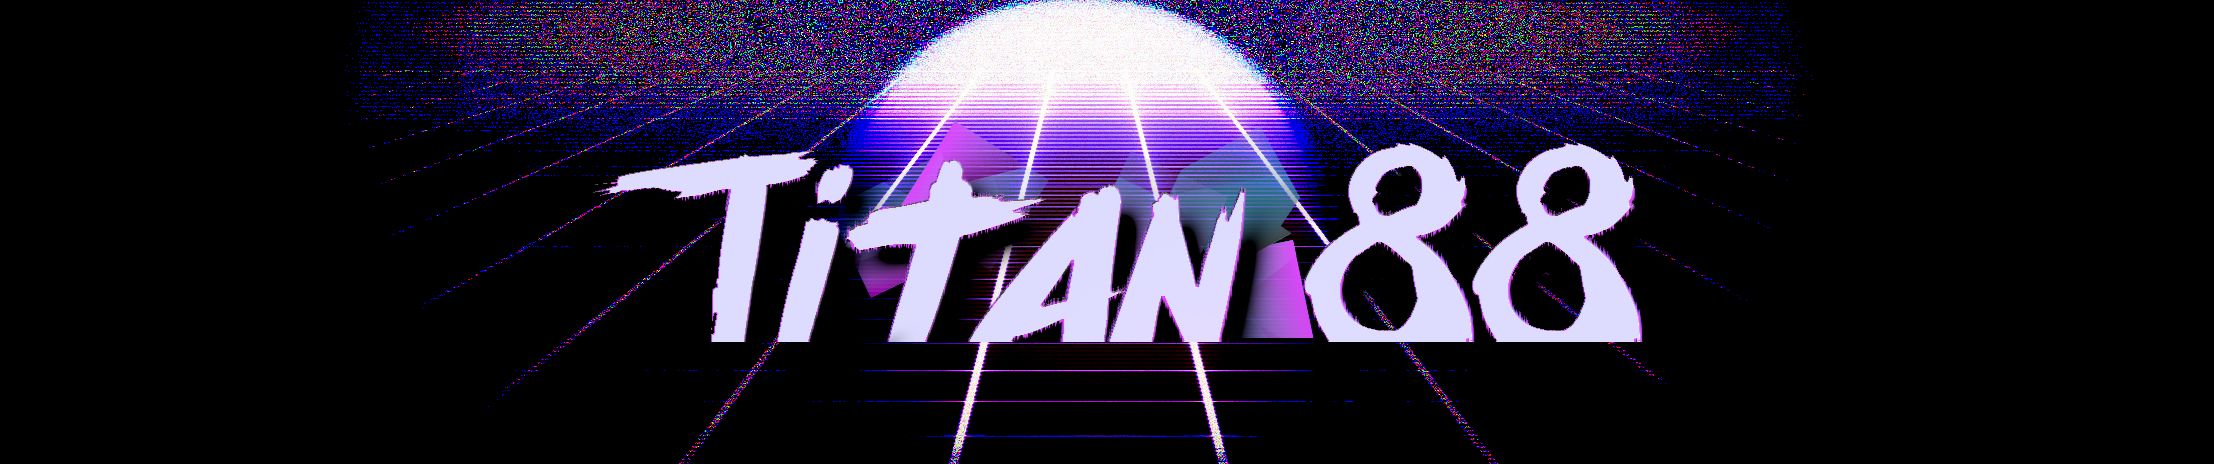 Titan88